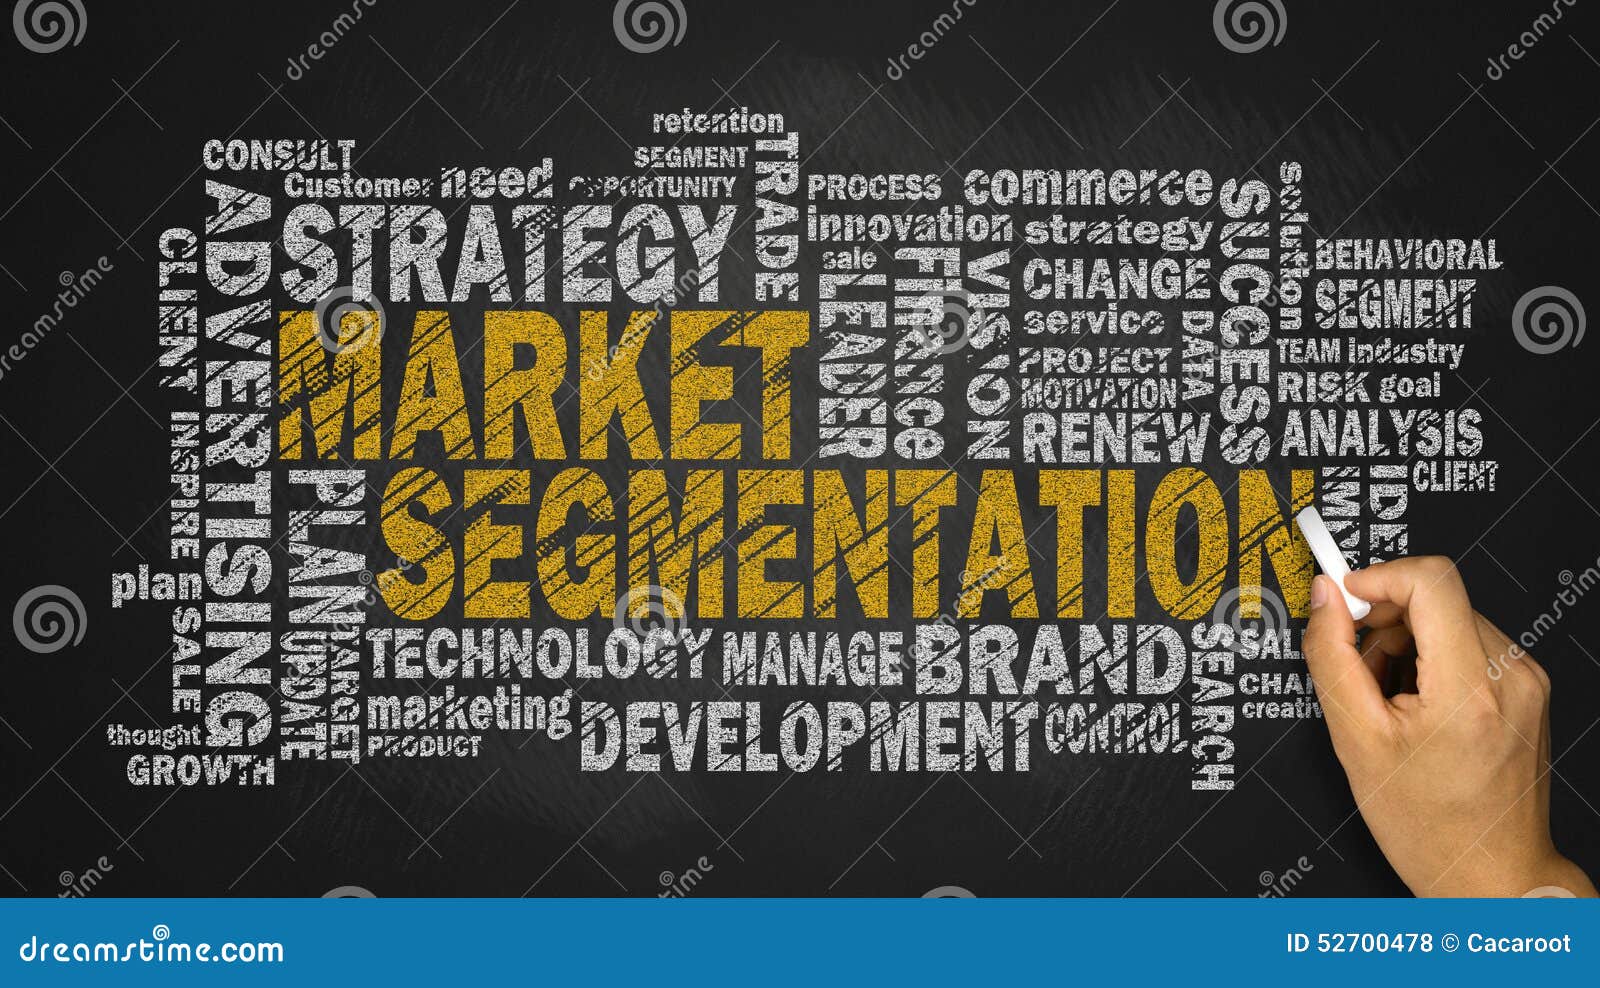 market segmentation word cloud